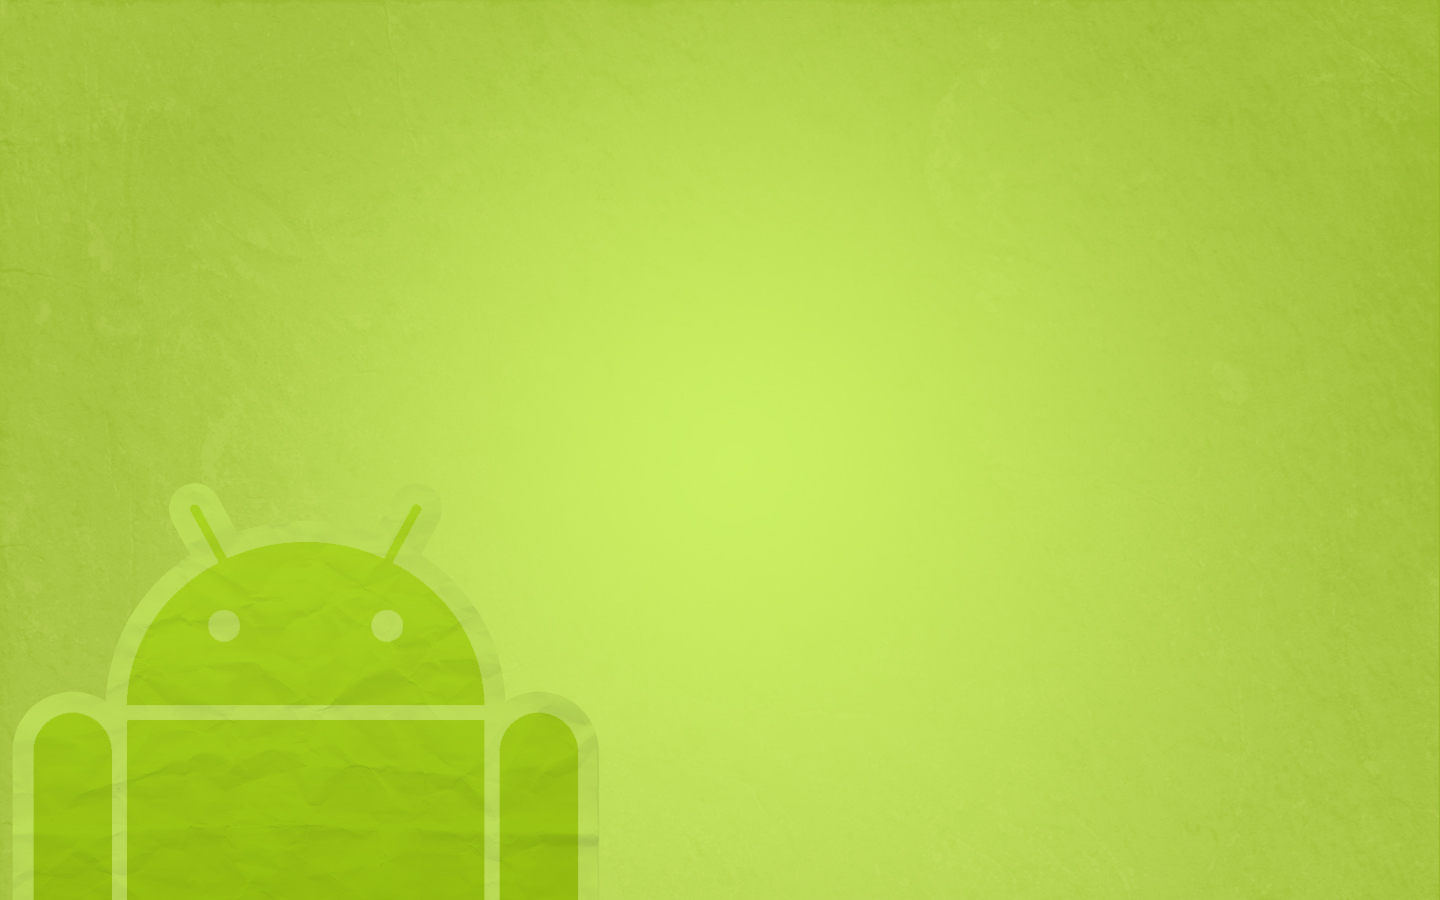 fondos de pantalla gratis para android,verde,amarillo,ilustración,fondo de pantalla